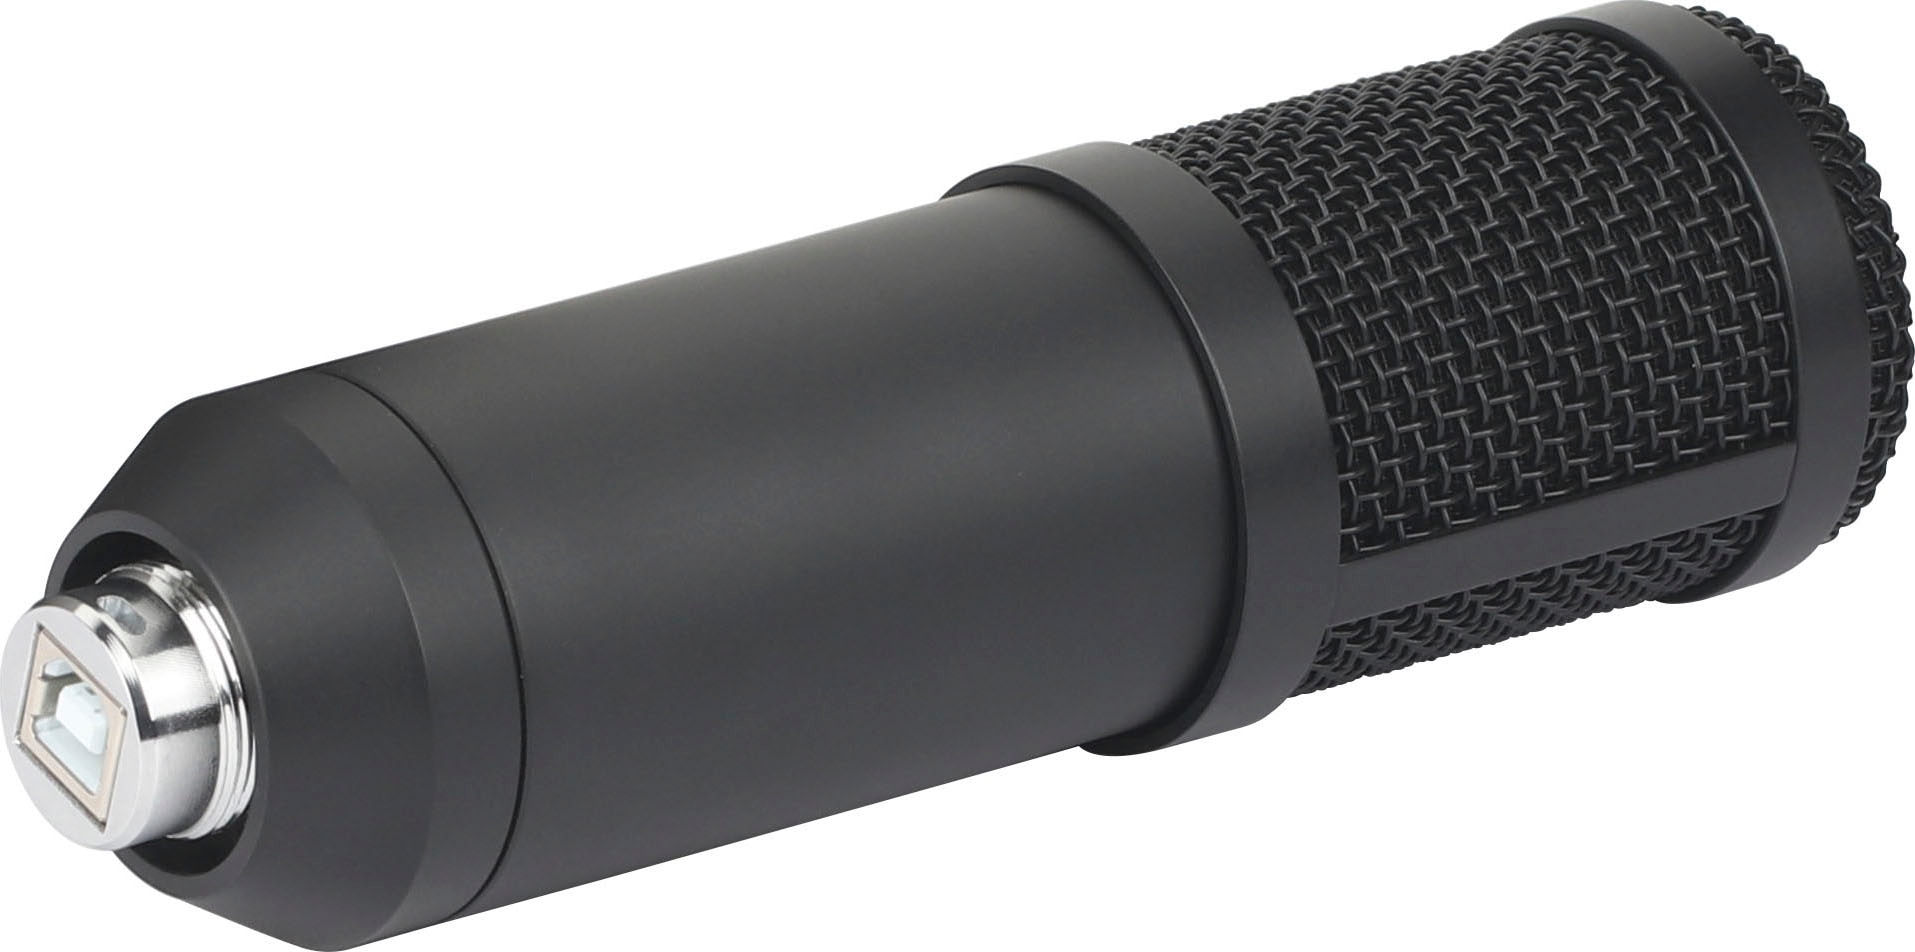 Streaming Hyrican mit »USB Mikrofon & Mikrofon ST-SM50 OTTO bei Popschutz« Set Mikrofonarm, Spinne